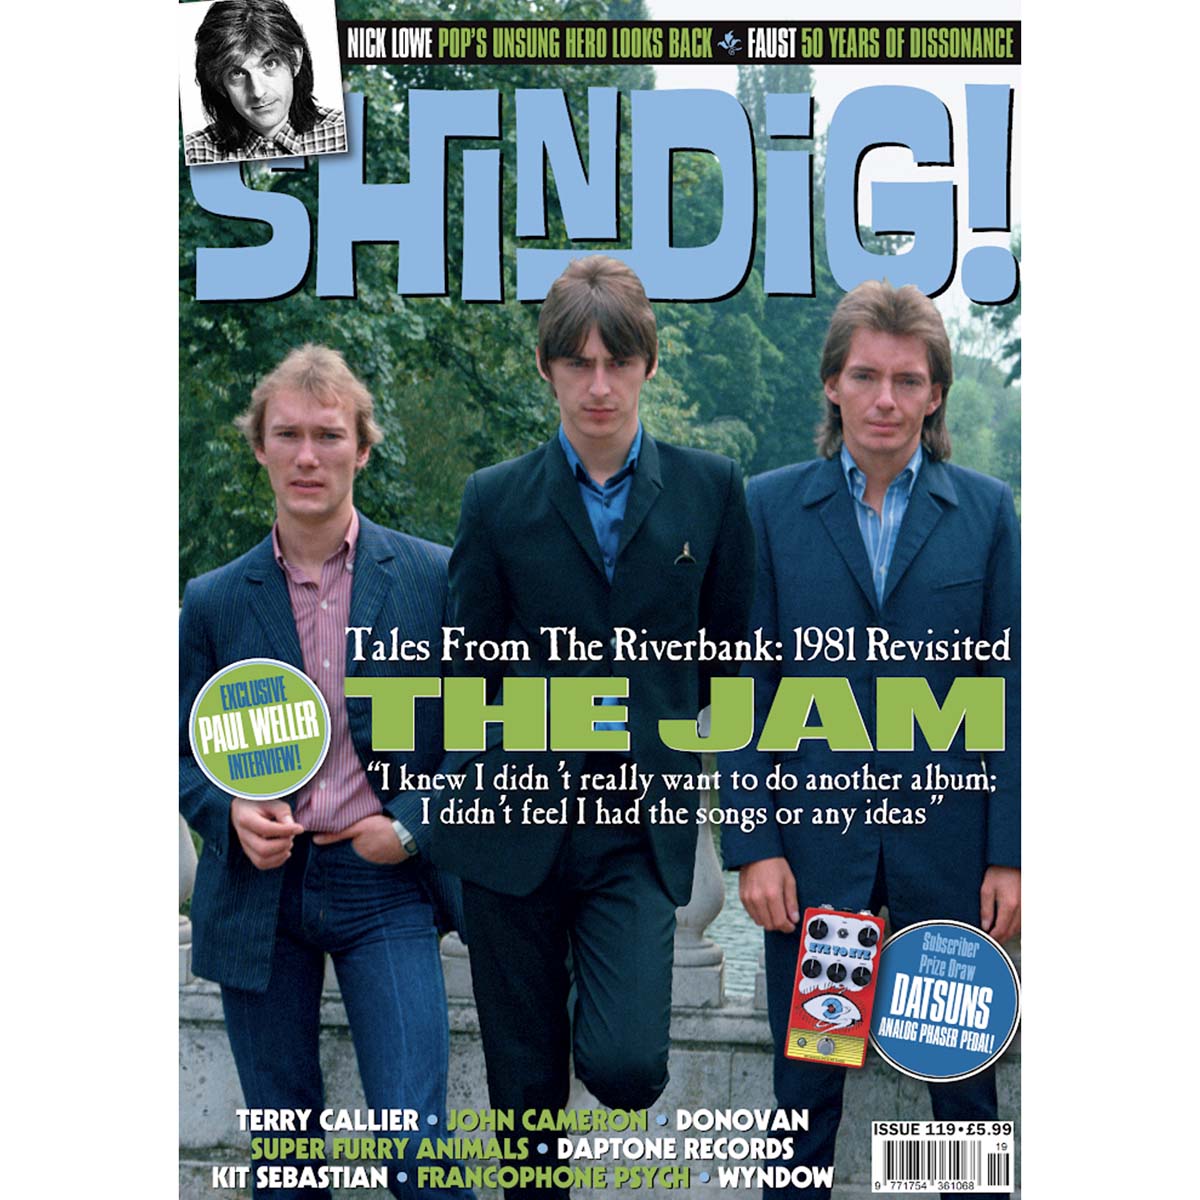 Shindig! Magazine Issue 119 (September 2021) The Jam